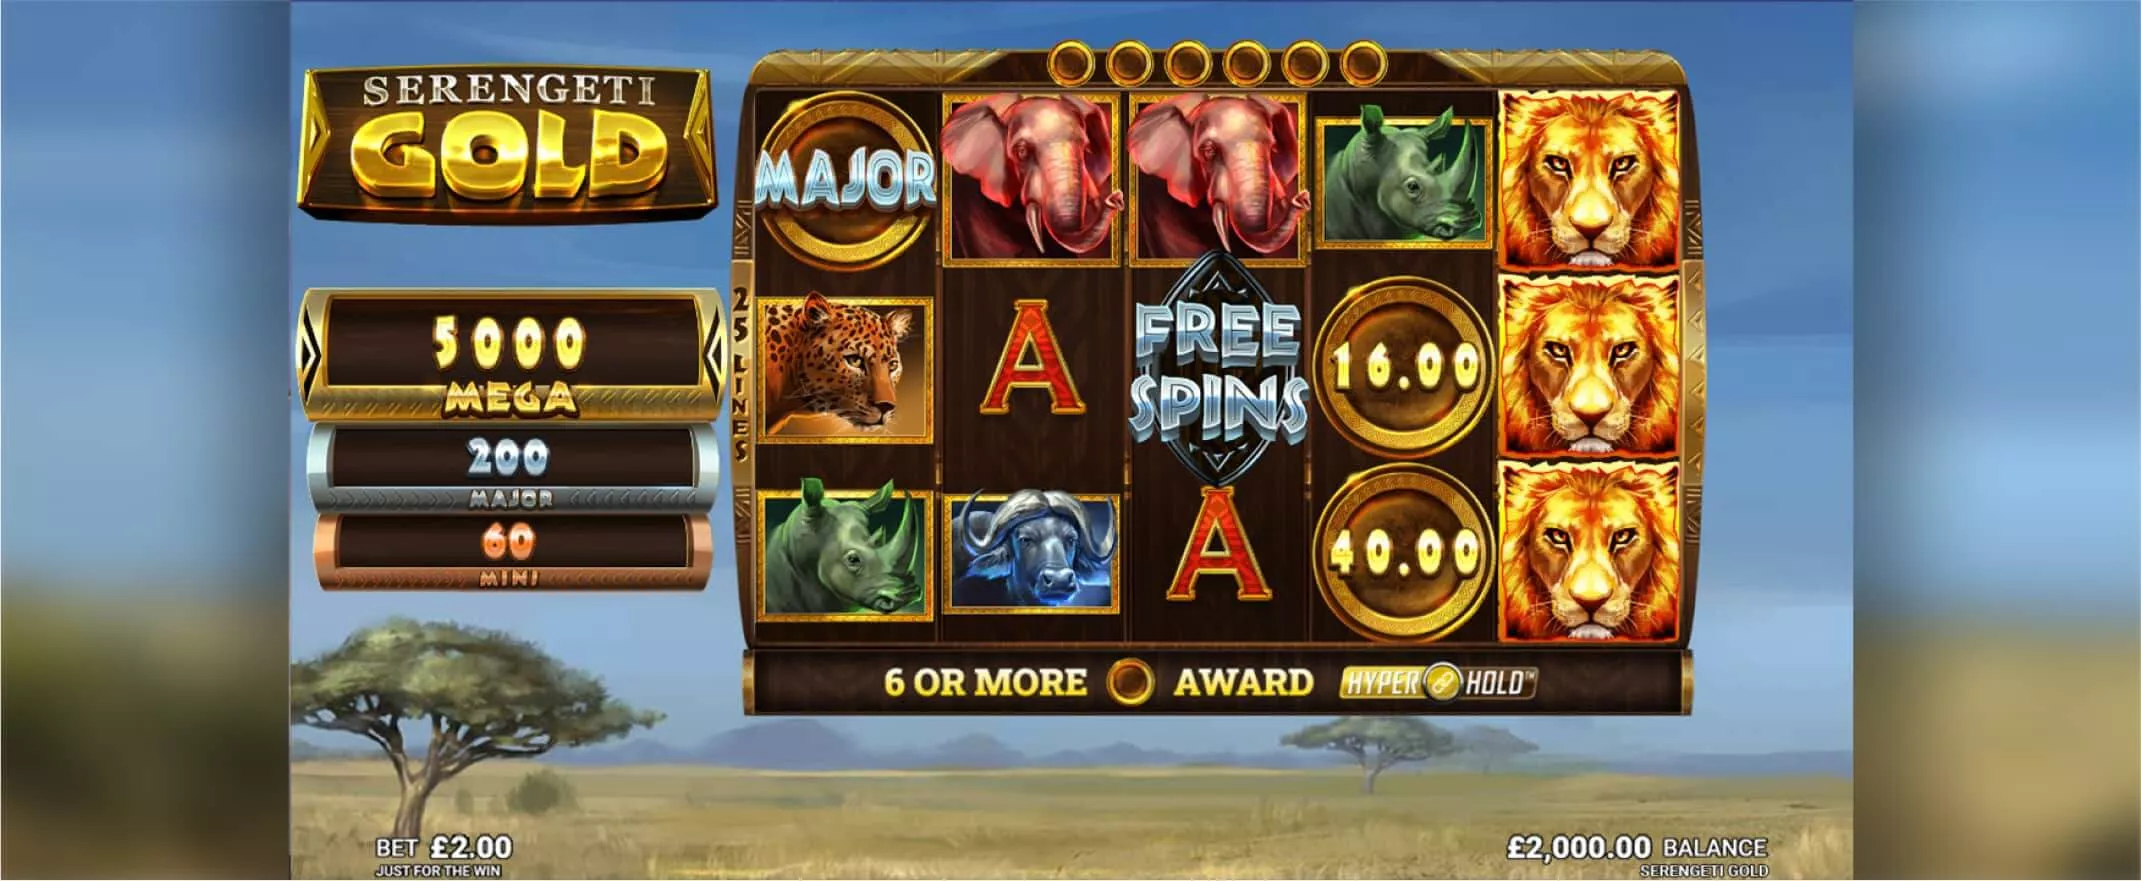 Serengeti Gold slot screenshot of the reels